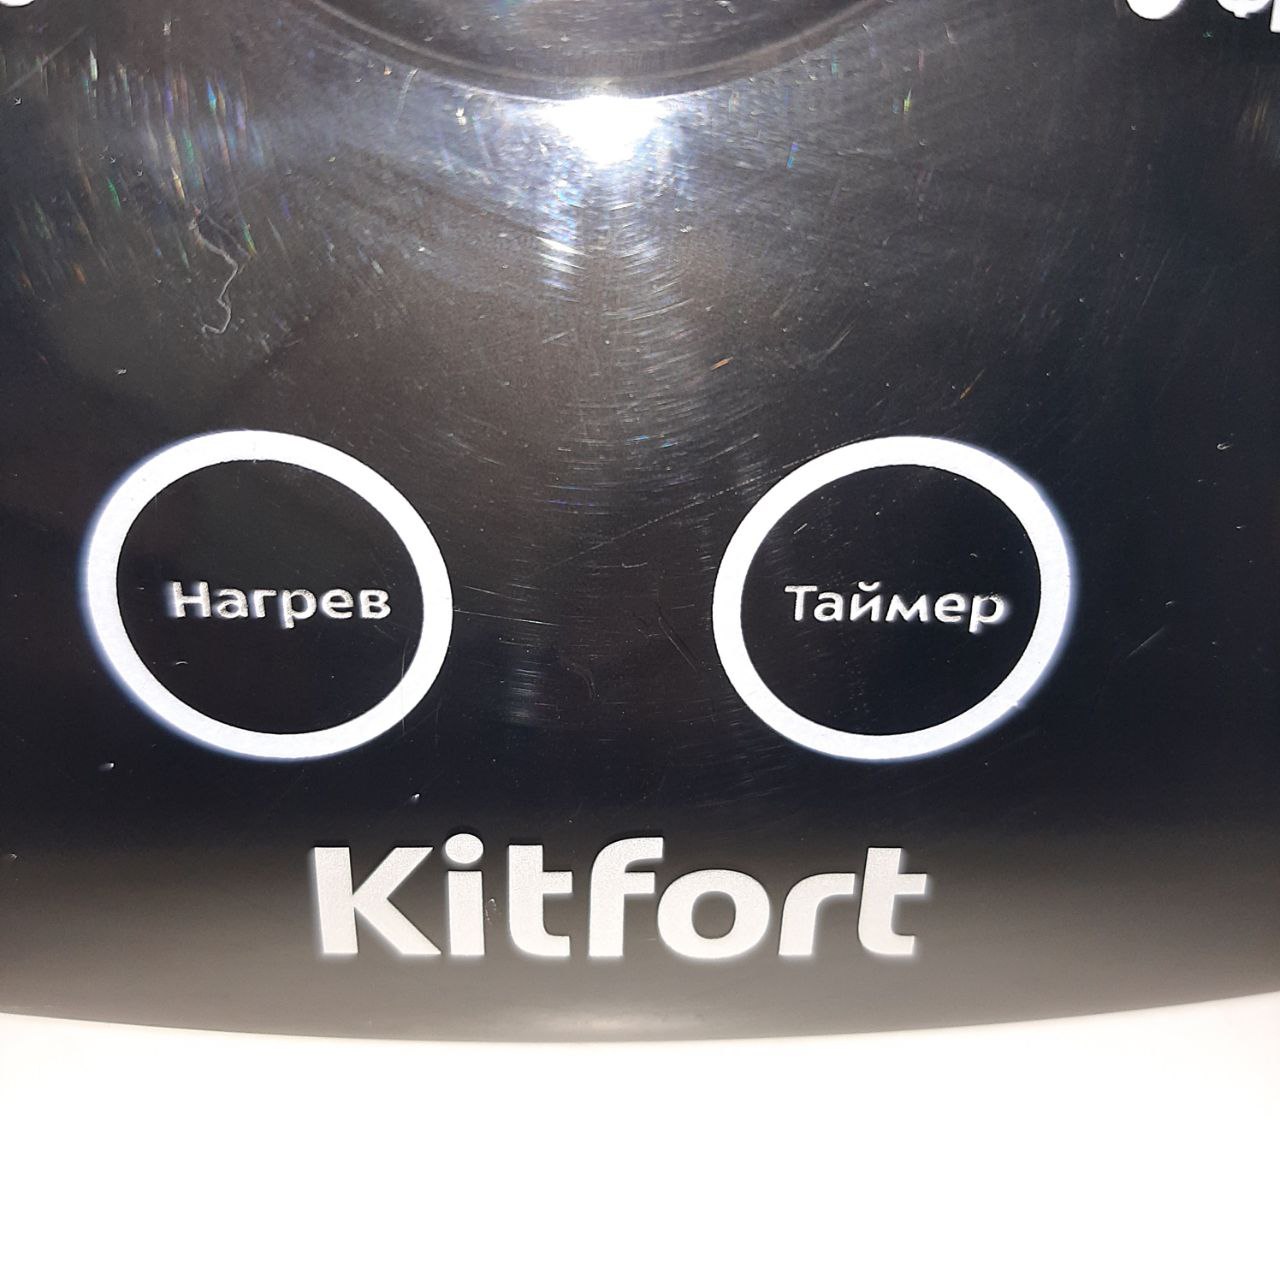    KitFort -3027